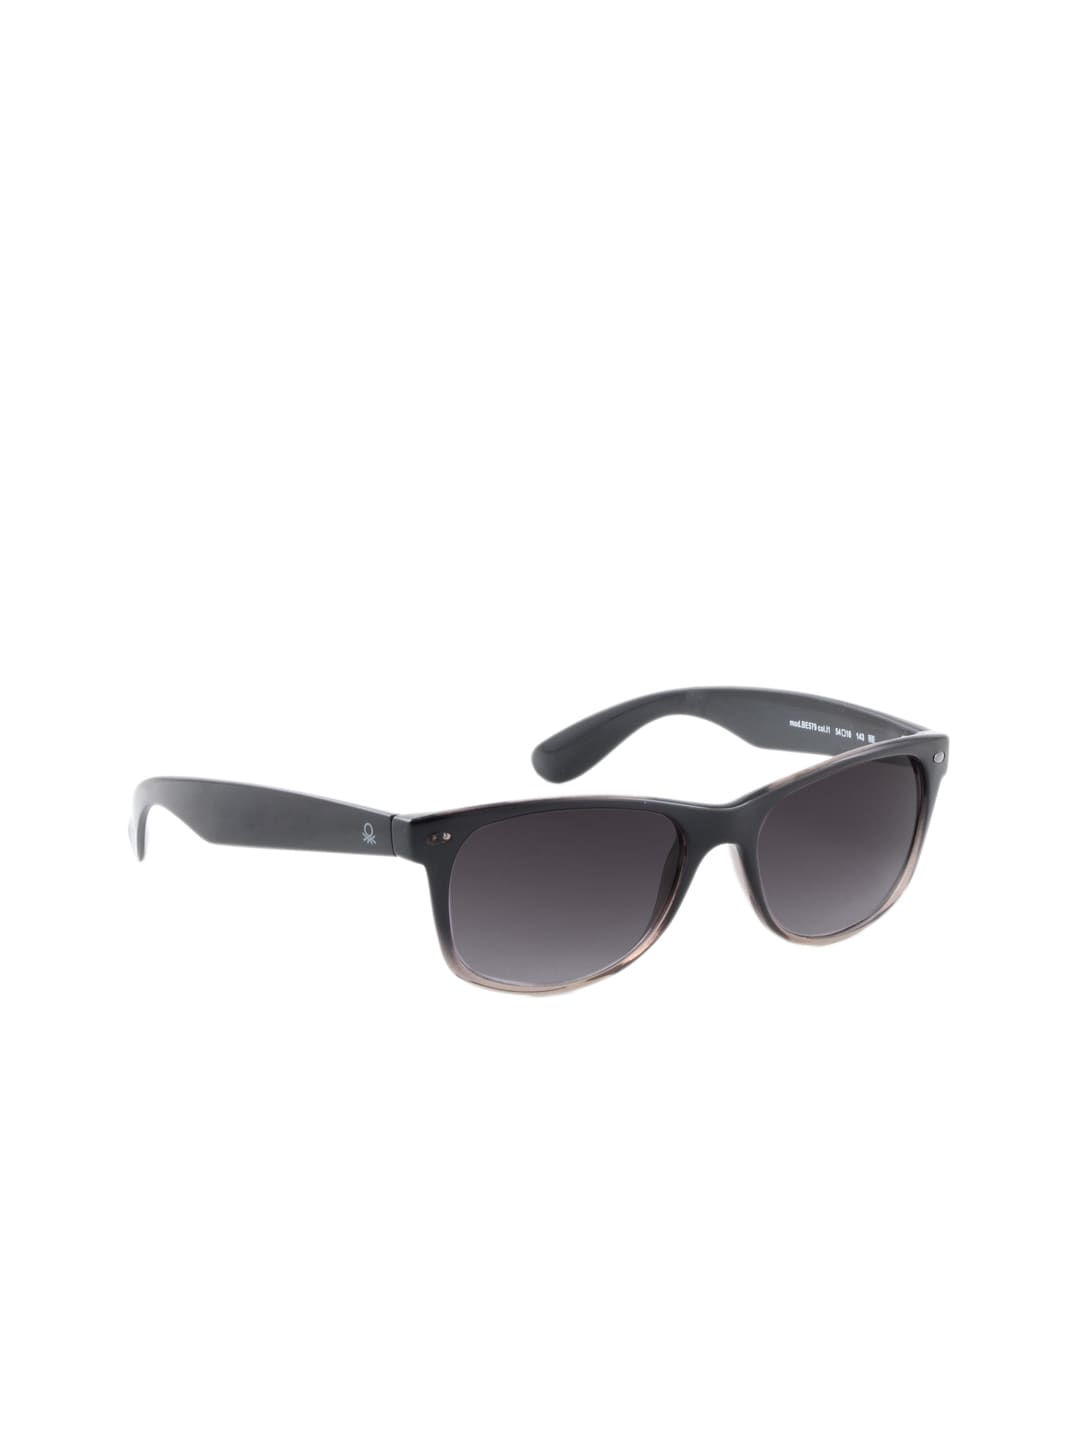 United Colors of Benetton Unisex Black Sunglasses